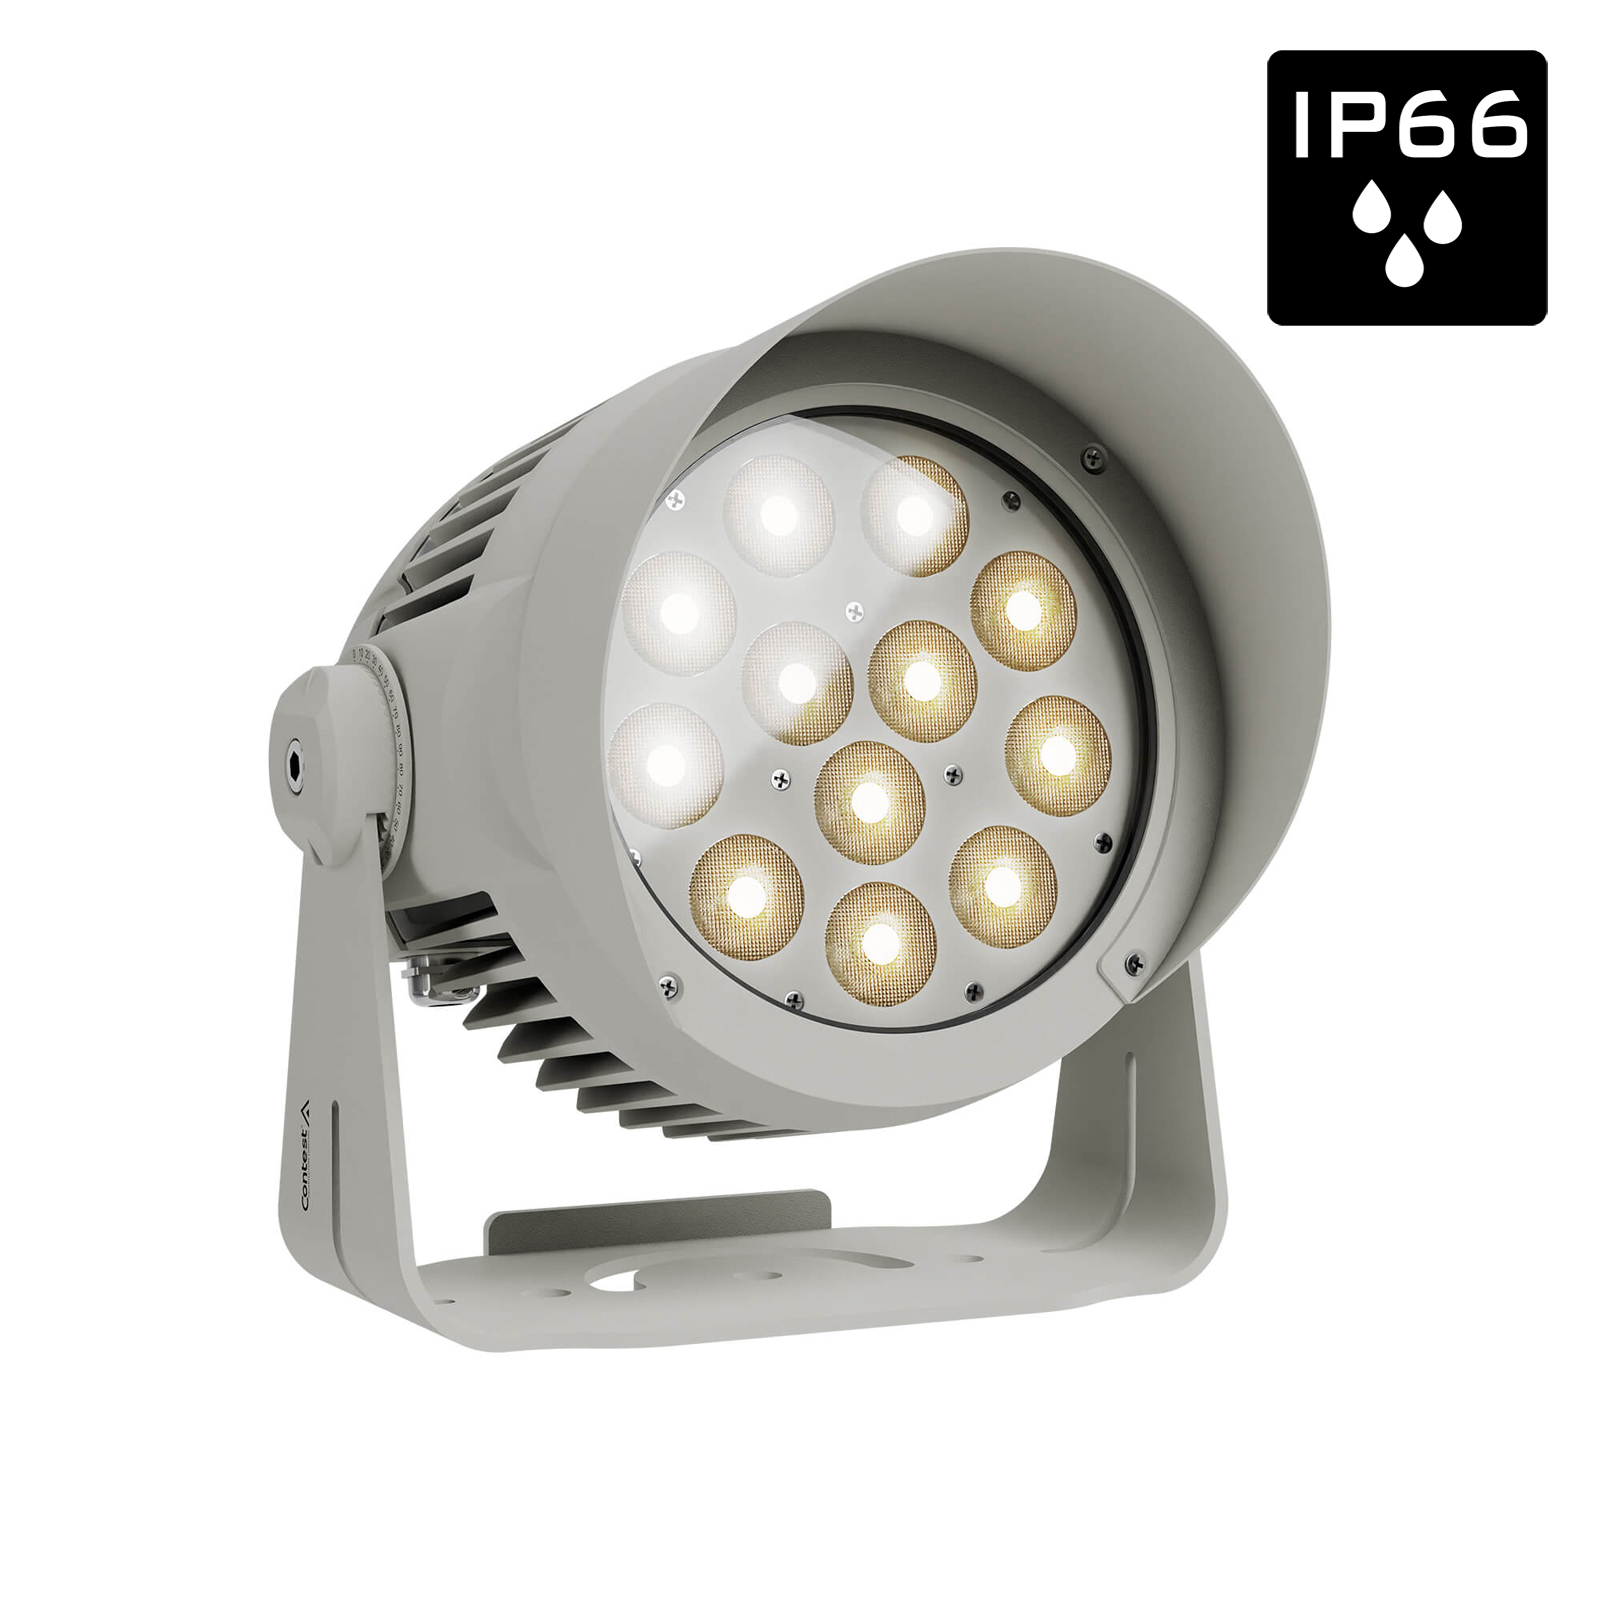 Architectural spotlight IP66 12x LEDs Dynamic White 27006000K 120W 25-